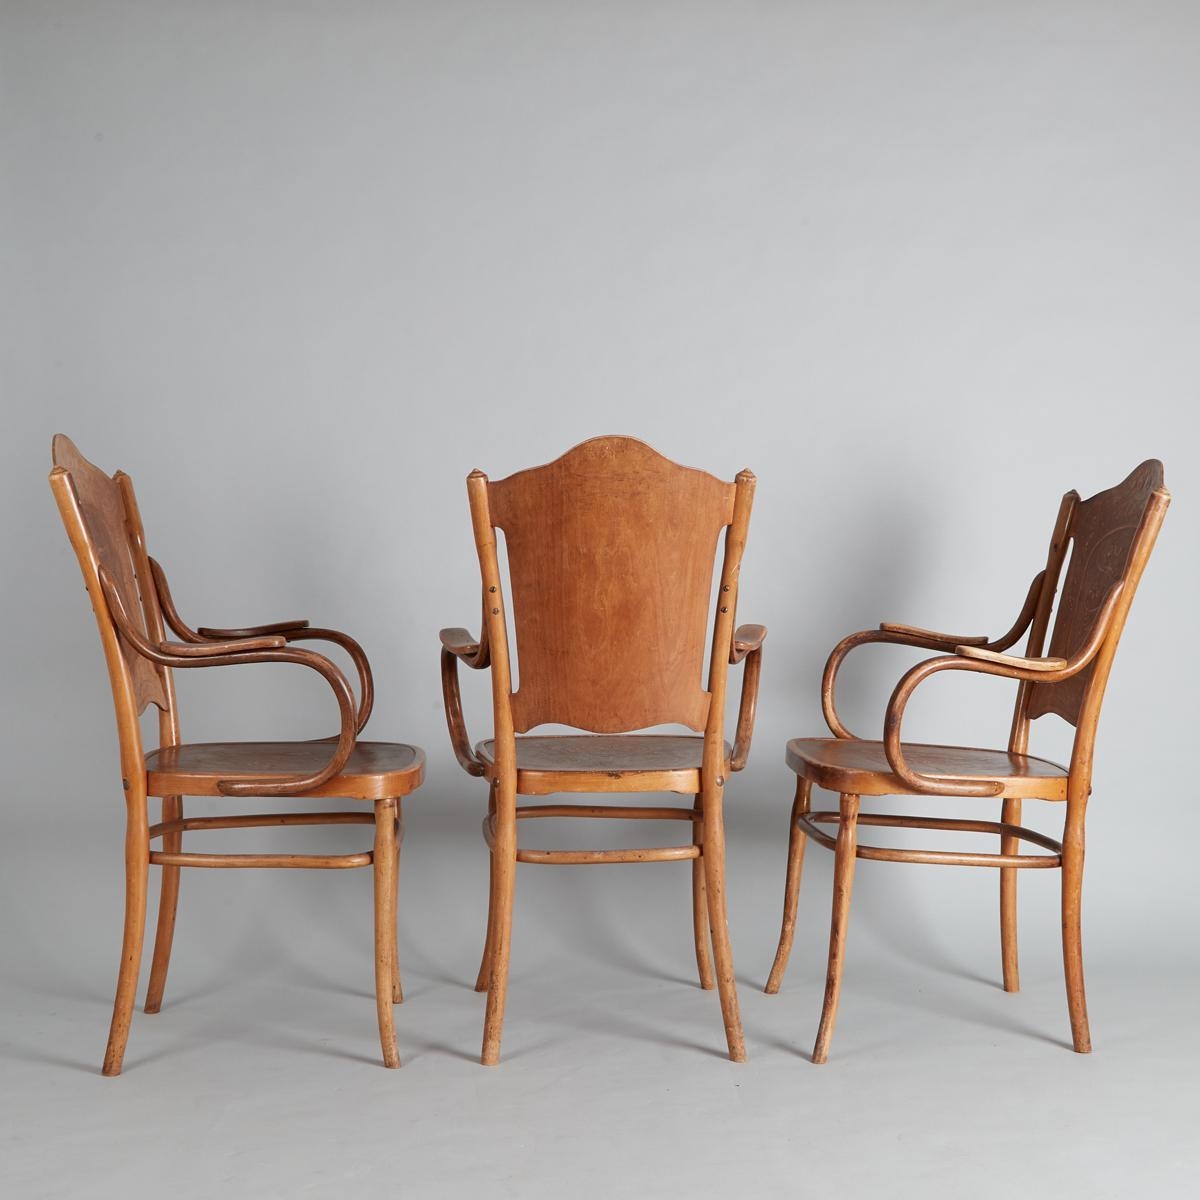 Artwork by Jacob & Josef Kohn, A Set of Three Vienna Secession Bentwood Chairs by J & J Kohn, Made of beech